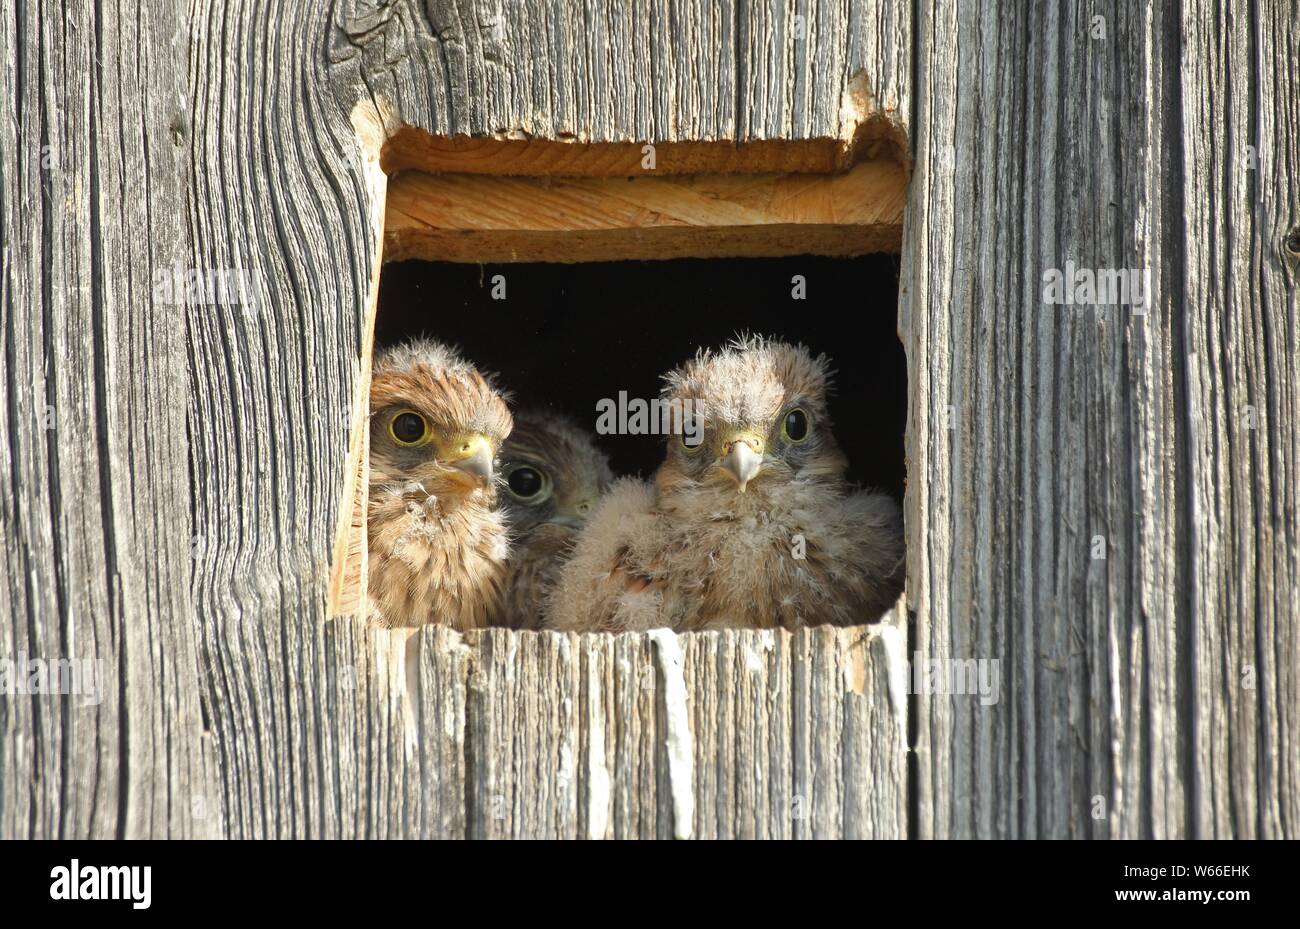 Common Kestrels (Falco tinnunculus), young birds in a nesting box in a field barn, Allgau, Bavaria, Germany Stock Photo